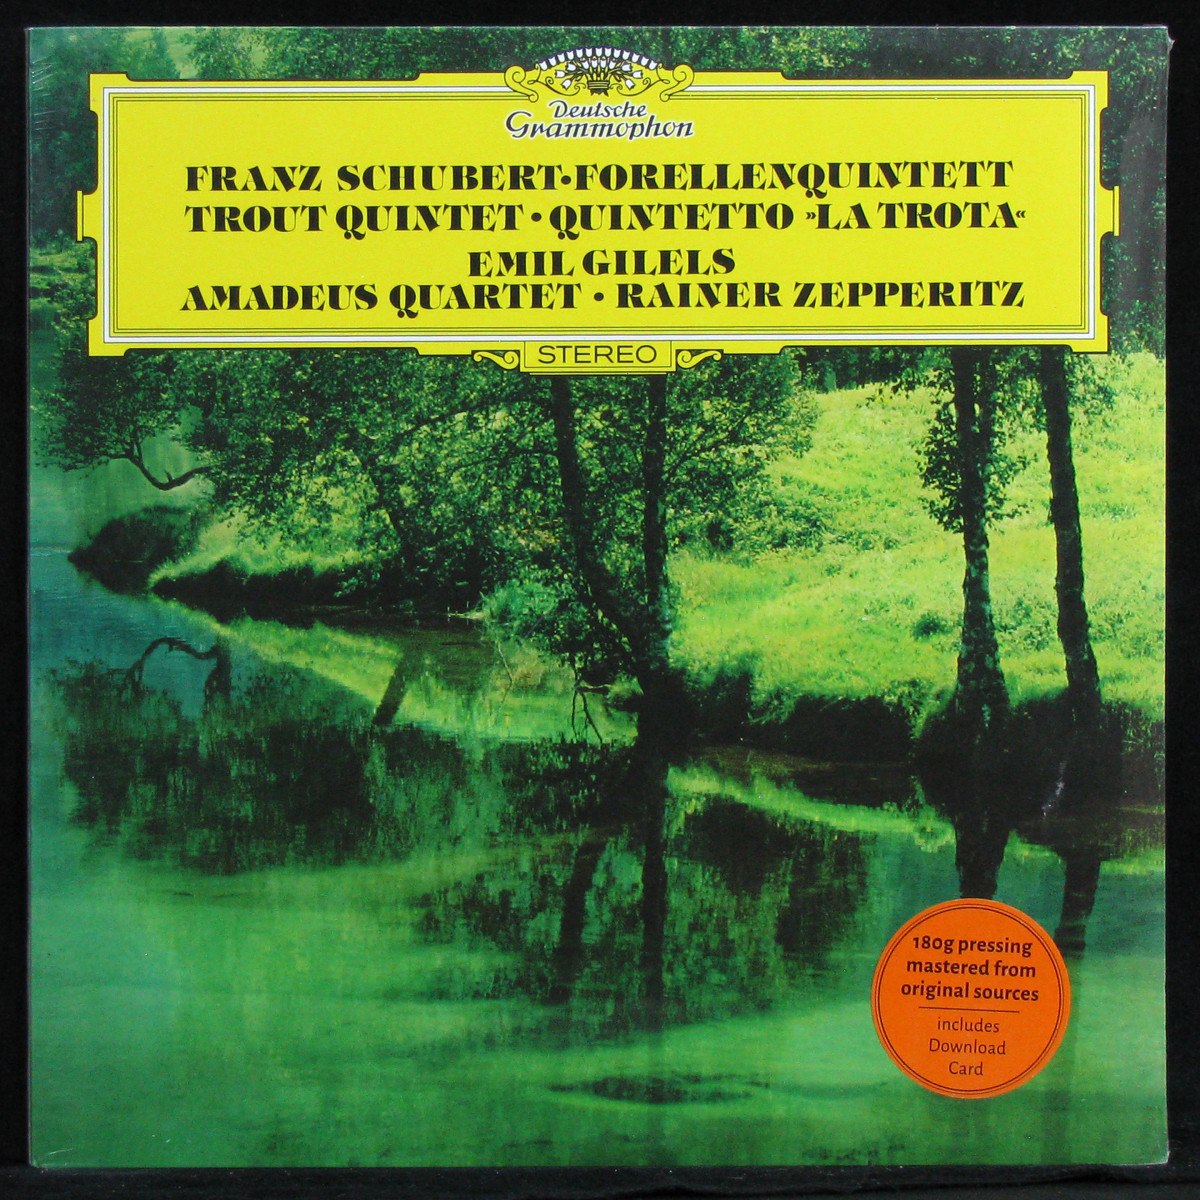 Schubert: Forellenquintett / Trout Quintet / La Trota